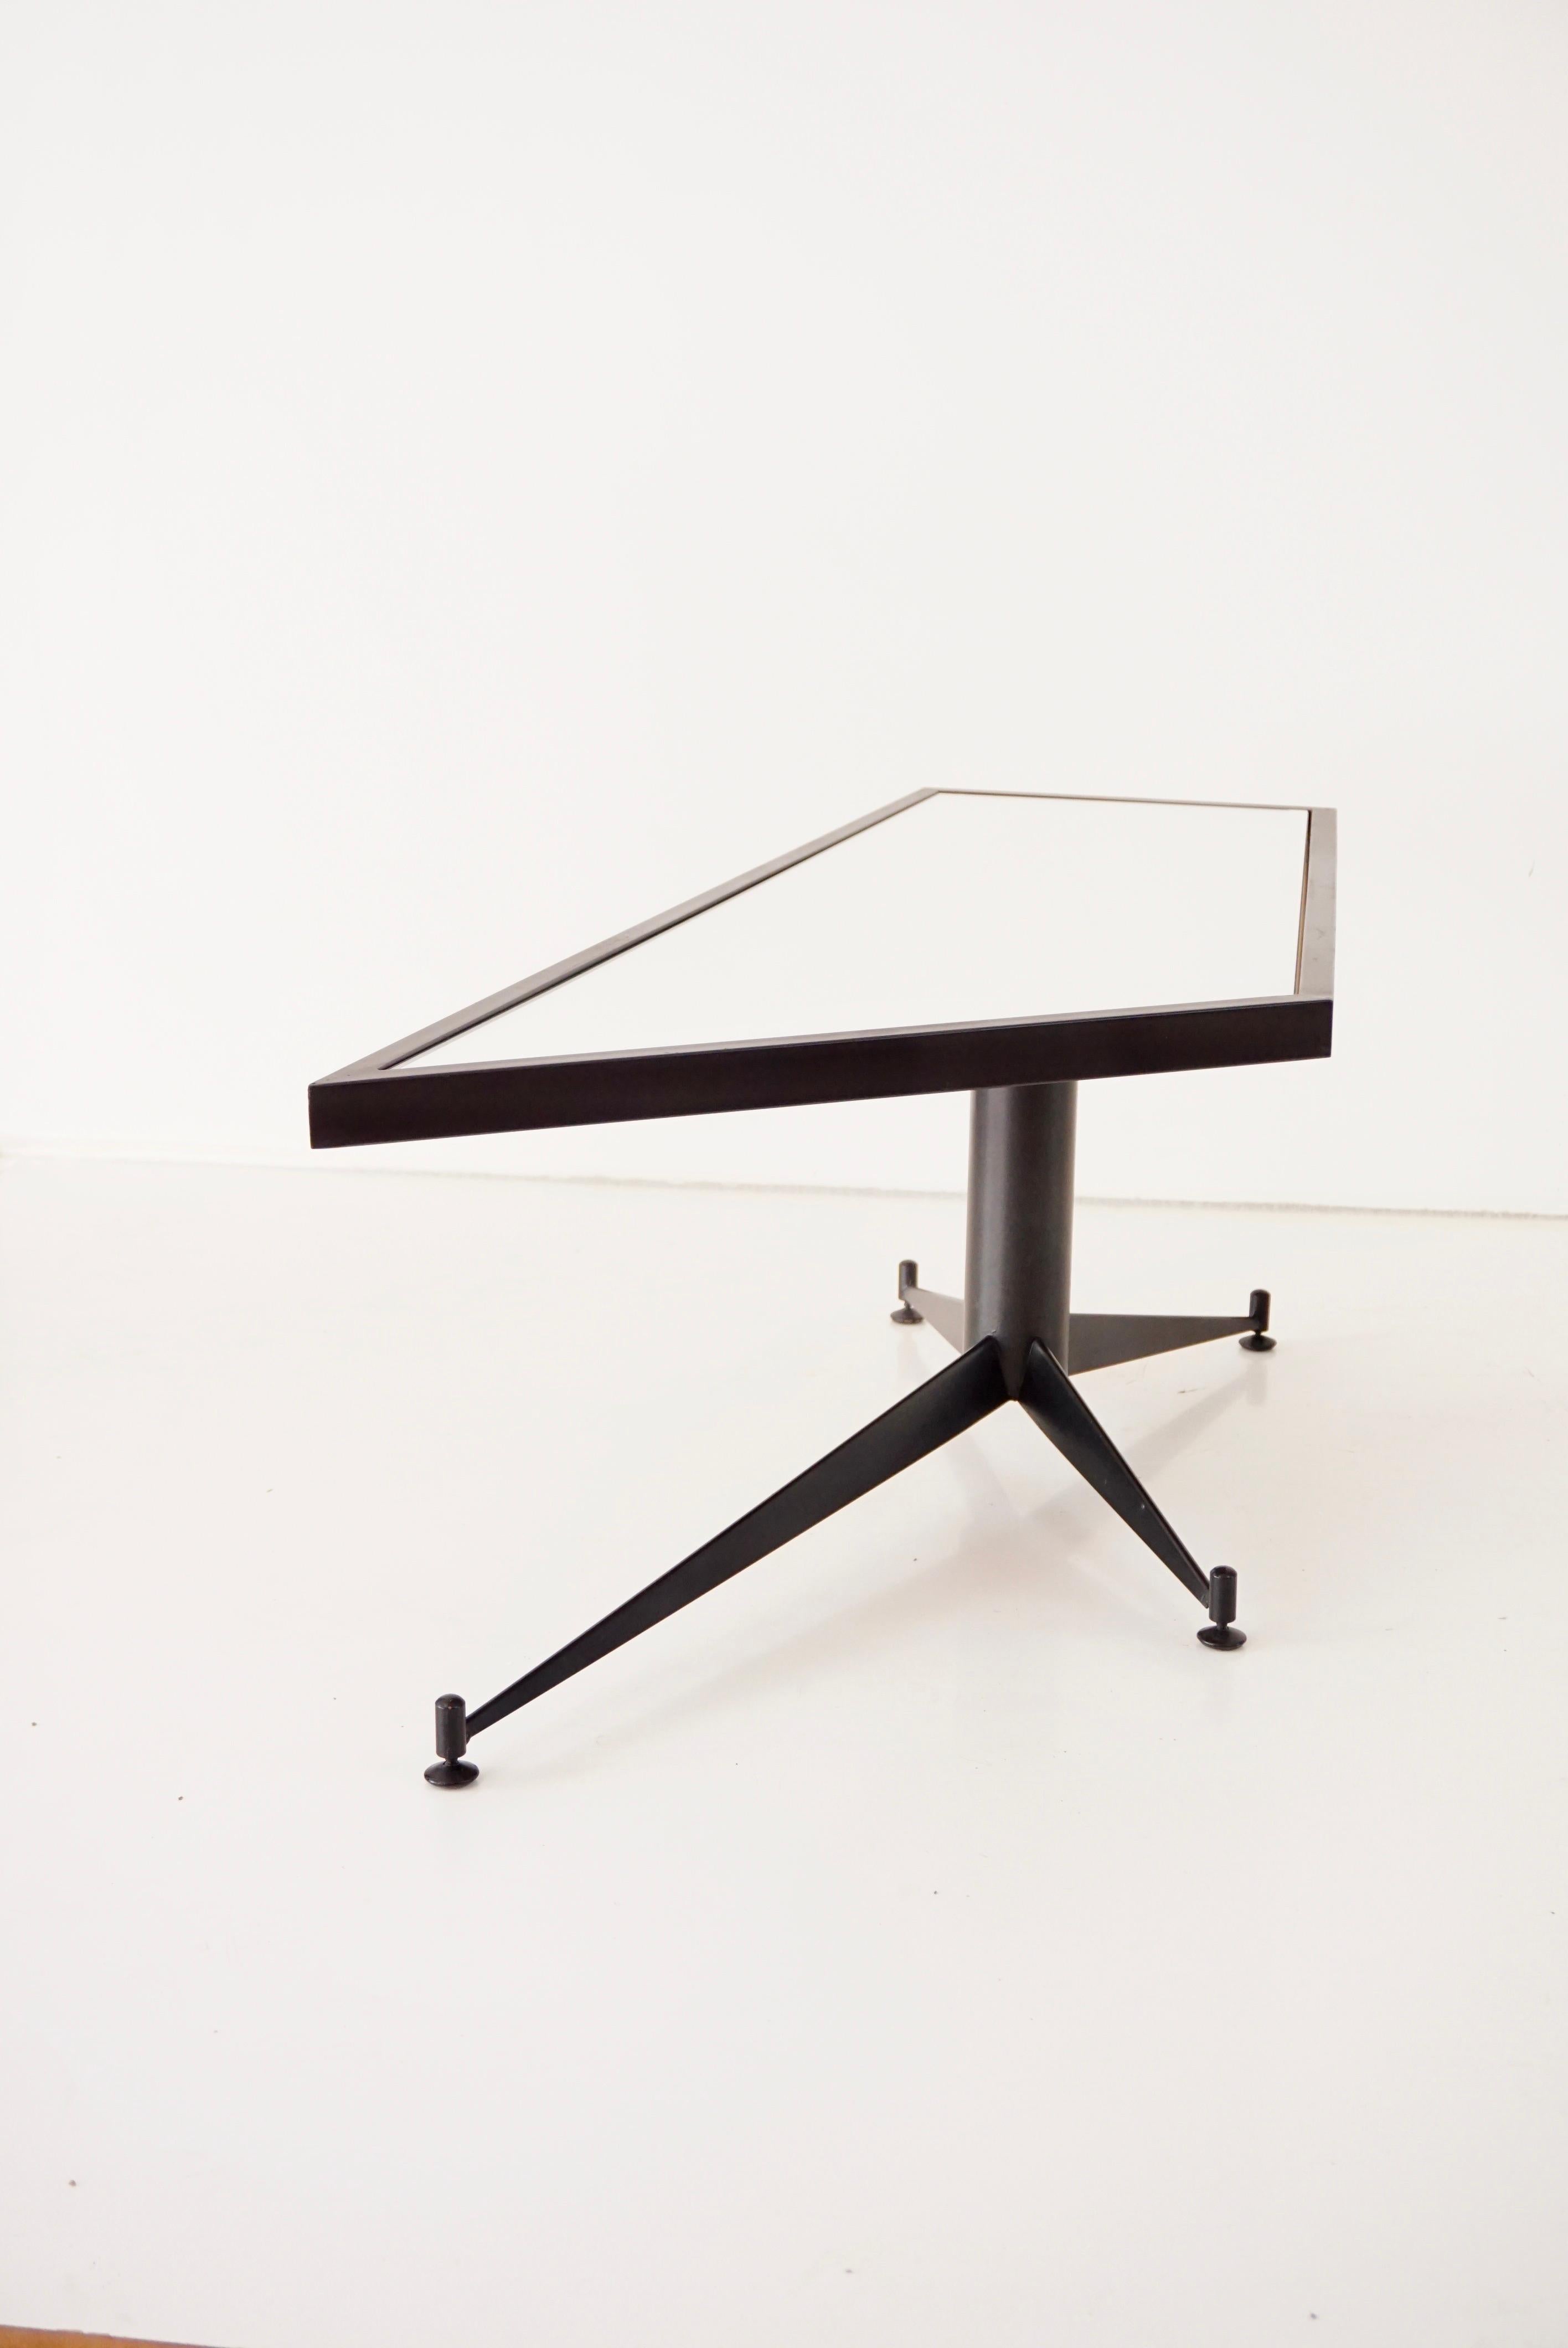 Lacquered Gio Ponti Irregular, Asymmetrical Black Mirrored Low Coffee Table, RIMA 1955